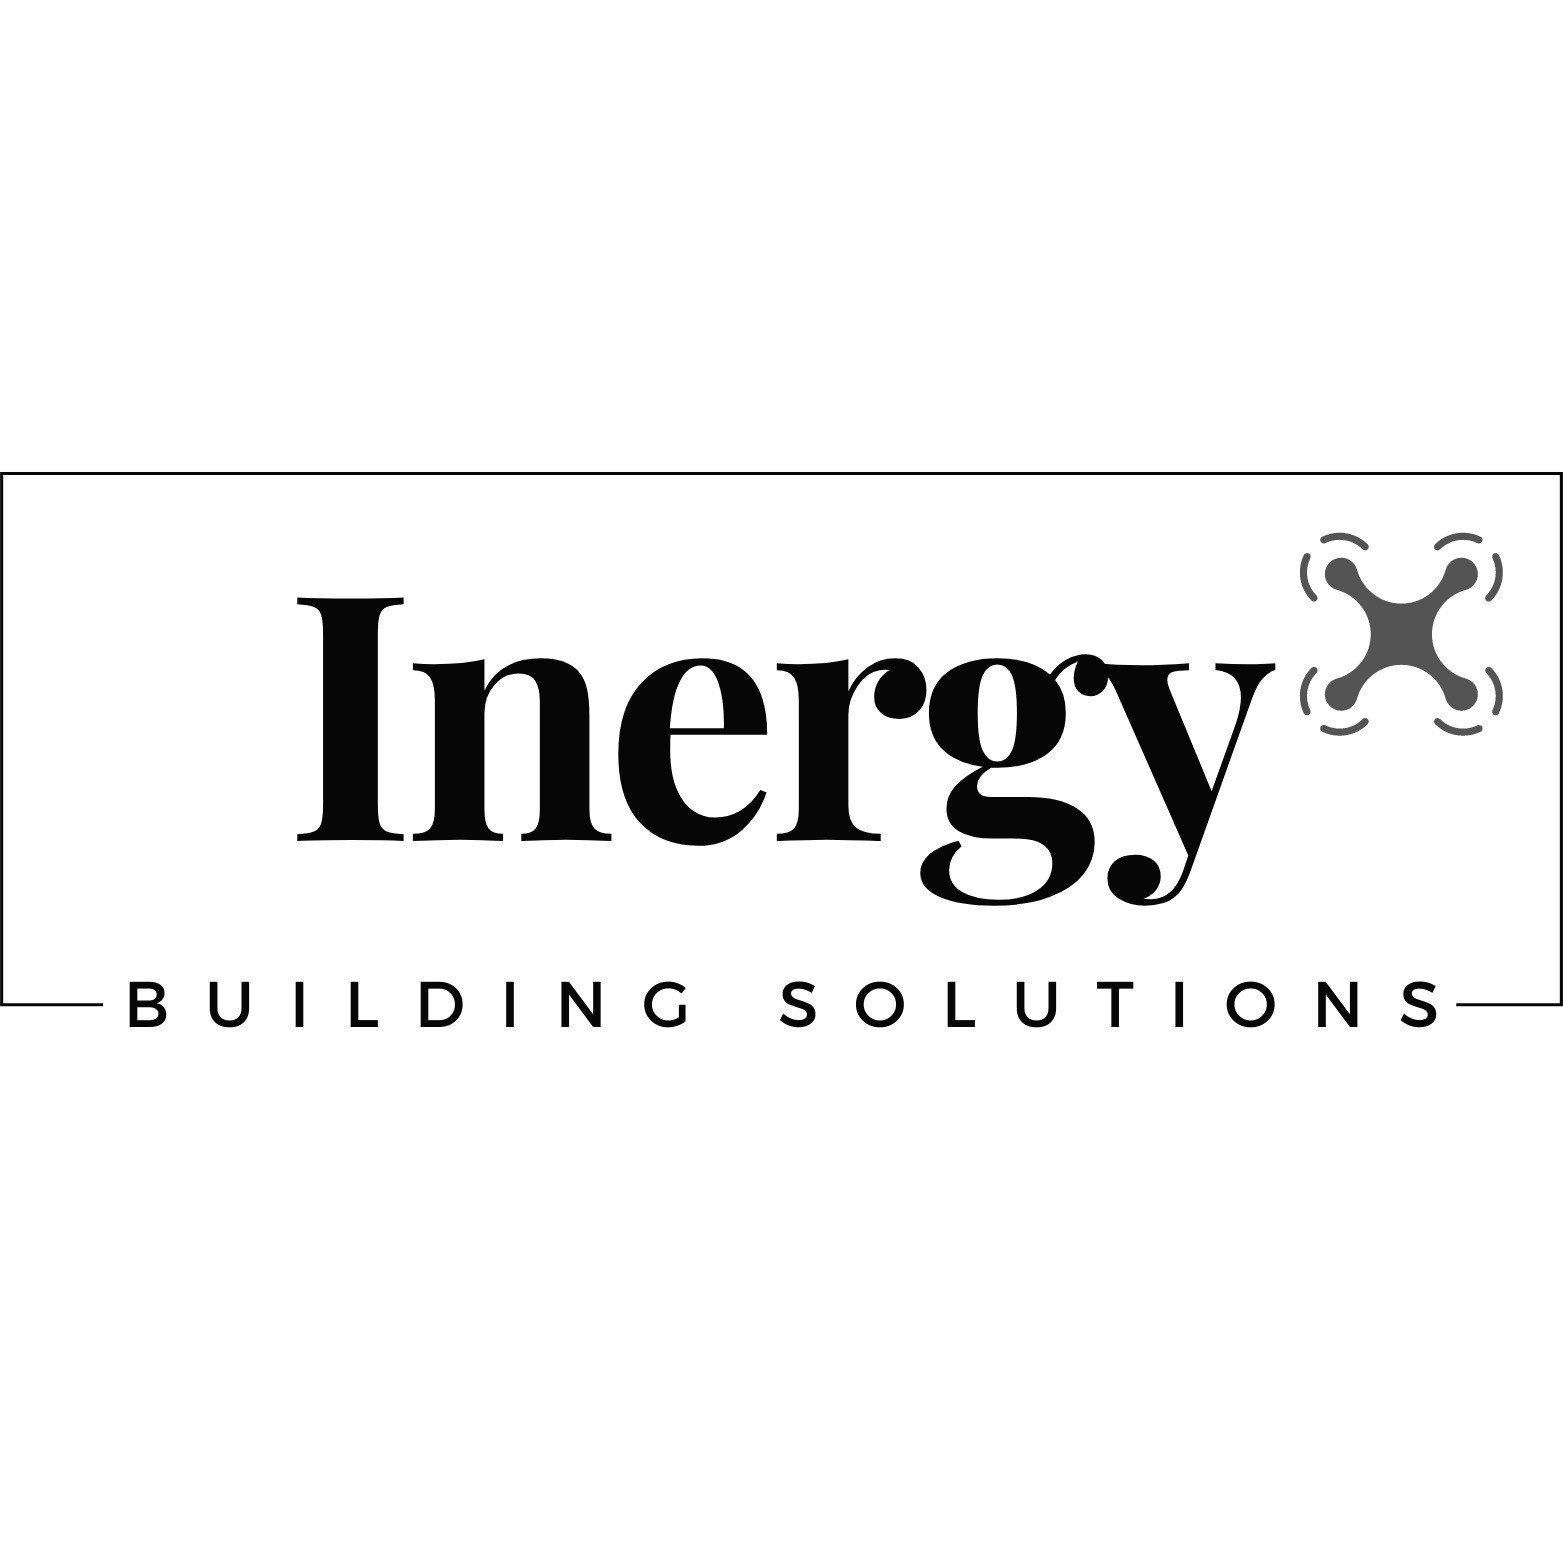 InergyX Building Solutions LLC company logo